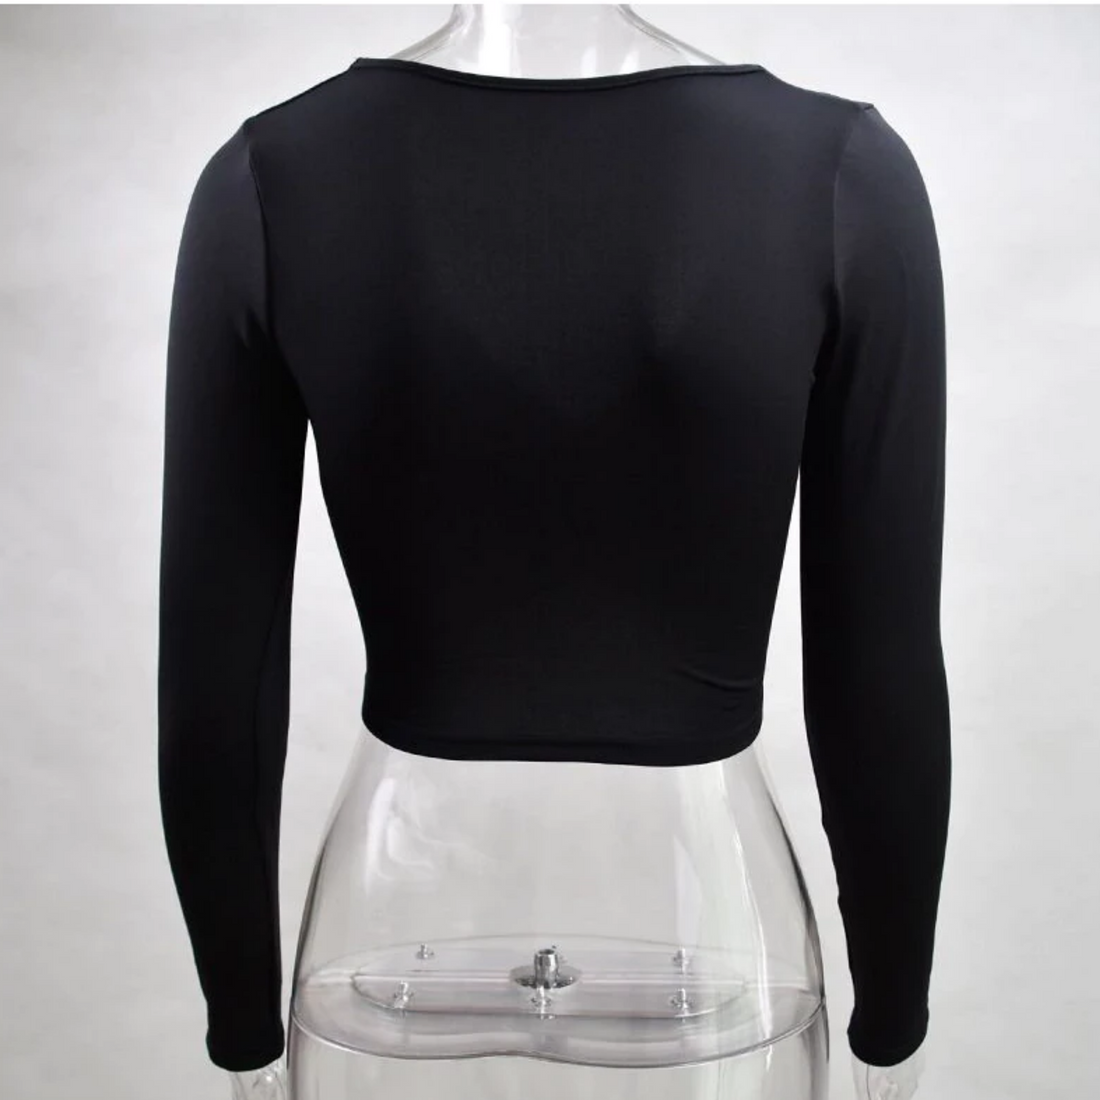 Women's Casual Long-Sleeved Slim V-Neck Crop Top